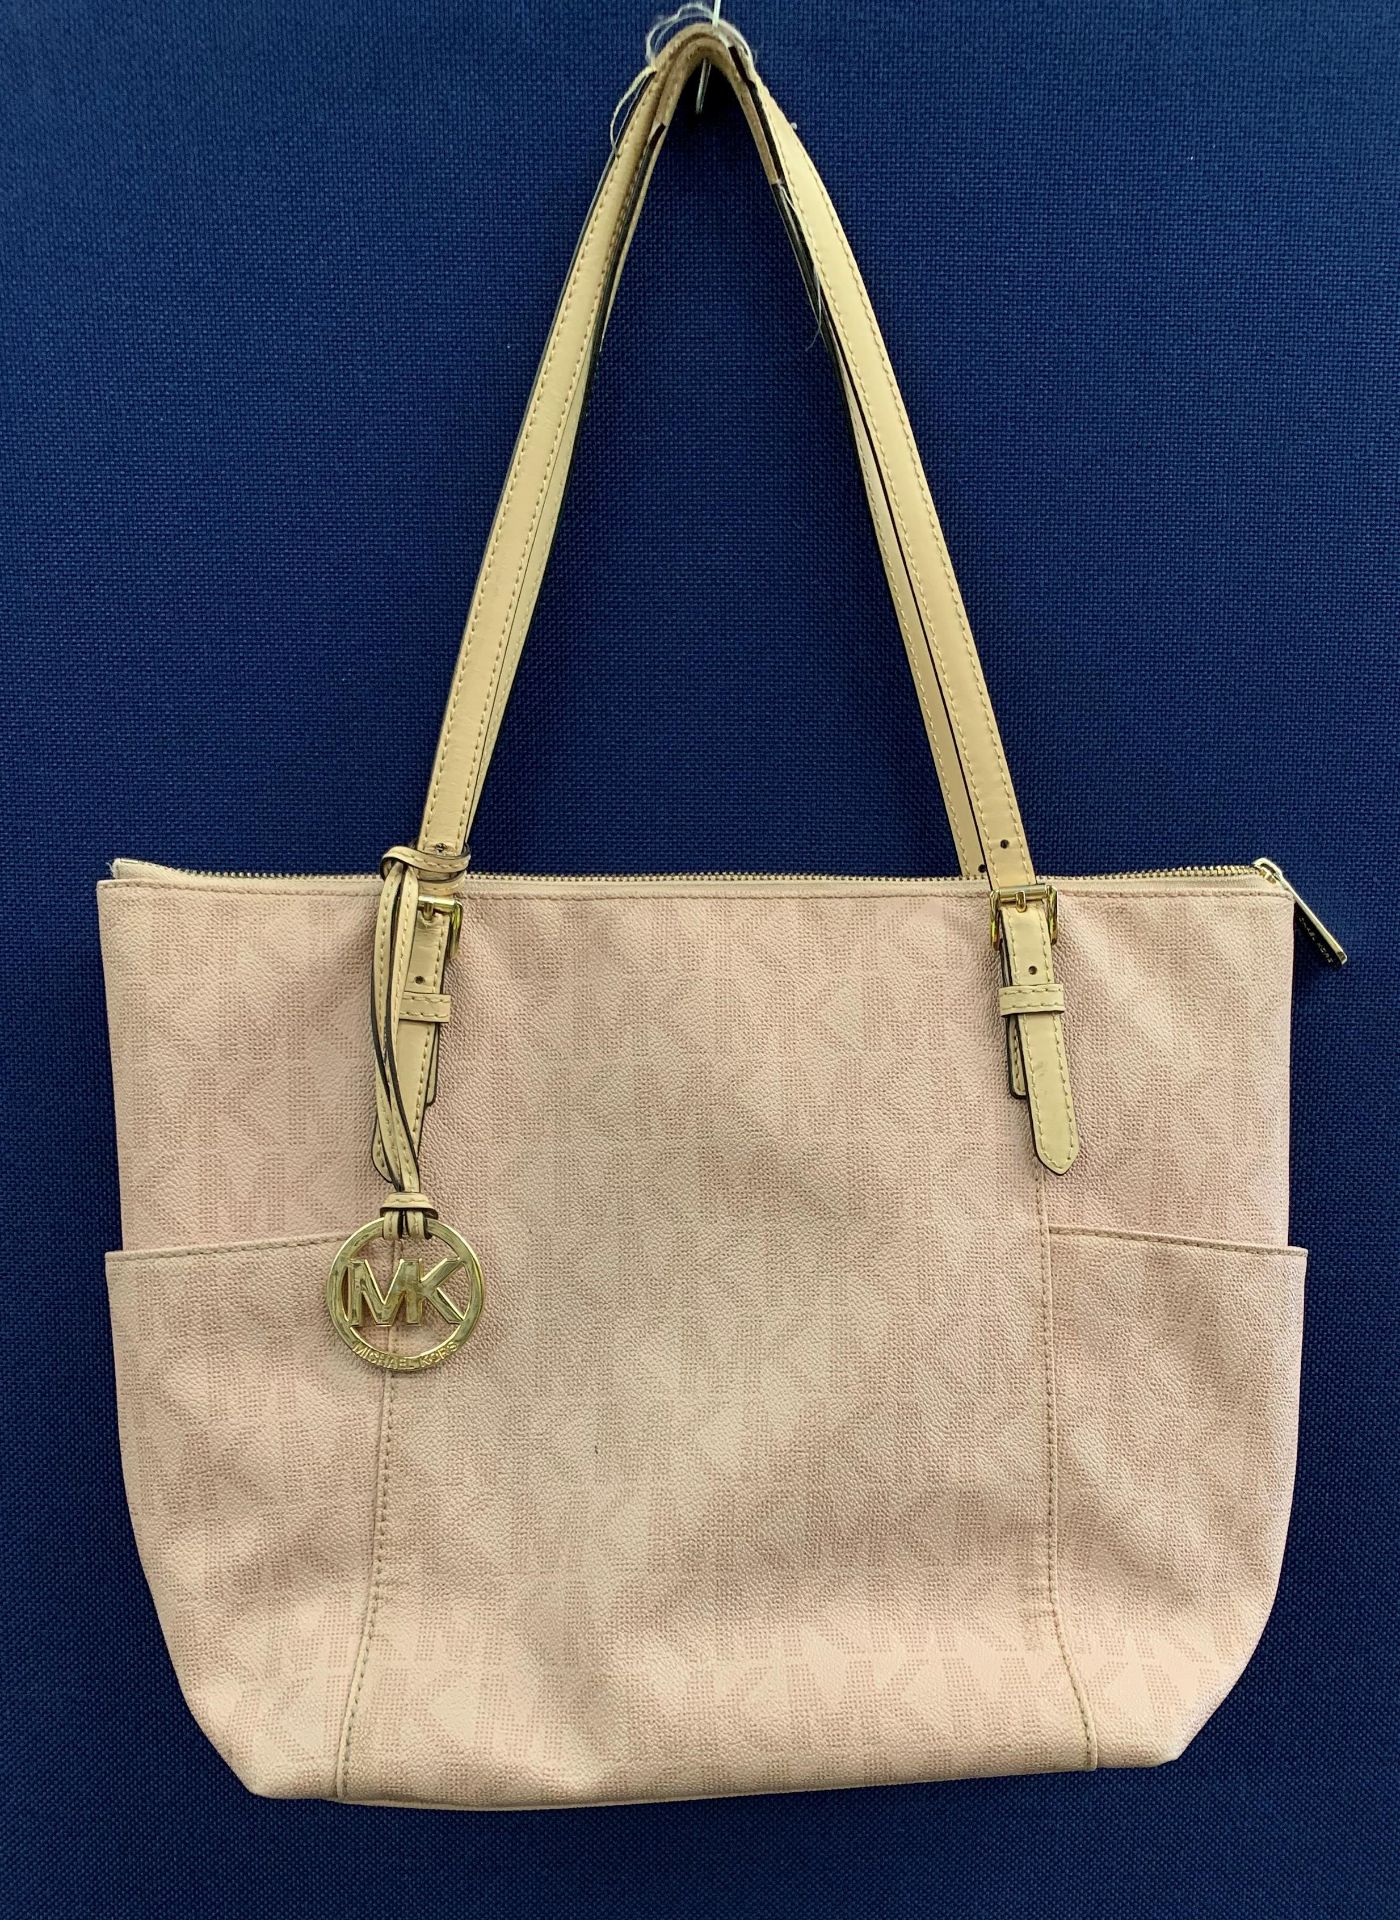 A Michael Kors light pink handbag